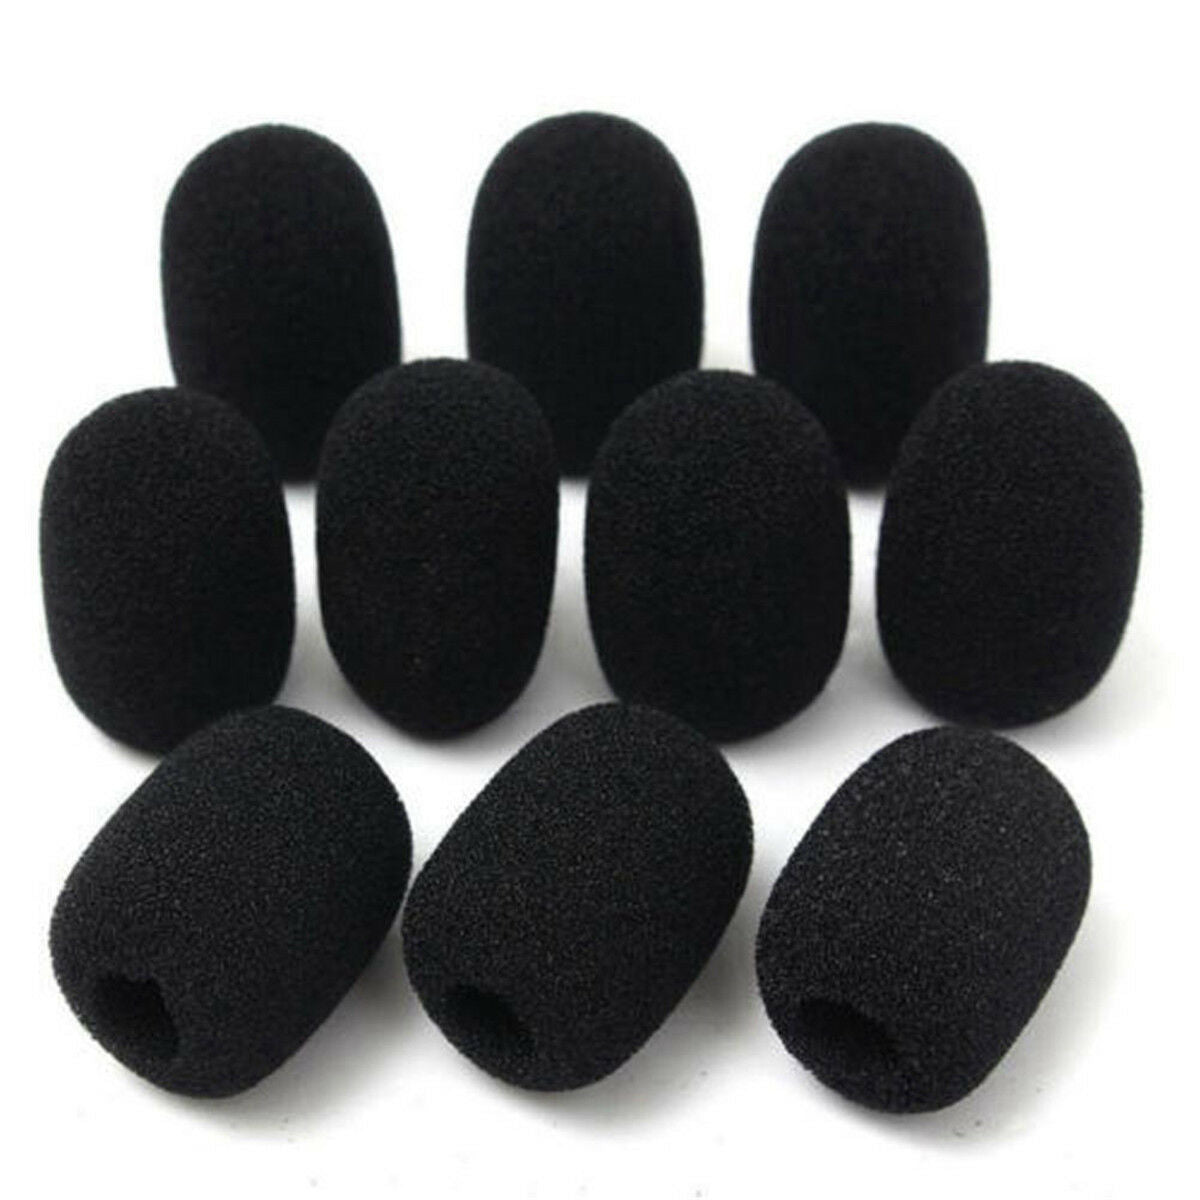 10 X Mini Microphone Windscreen Foam Cover for Lapel Lavalier Headset Mic Black